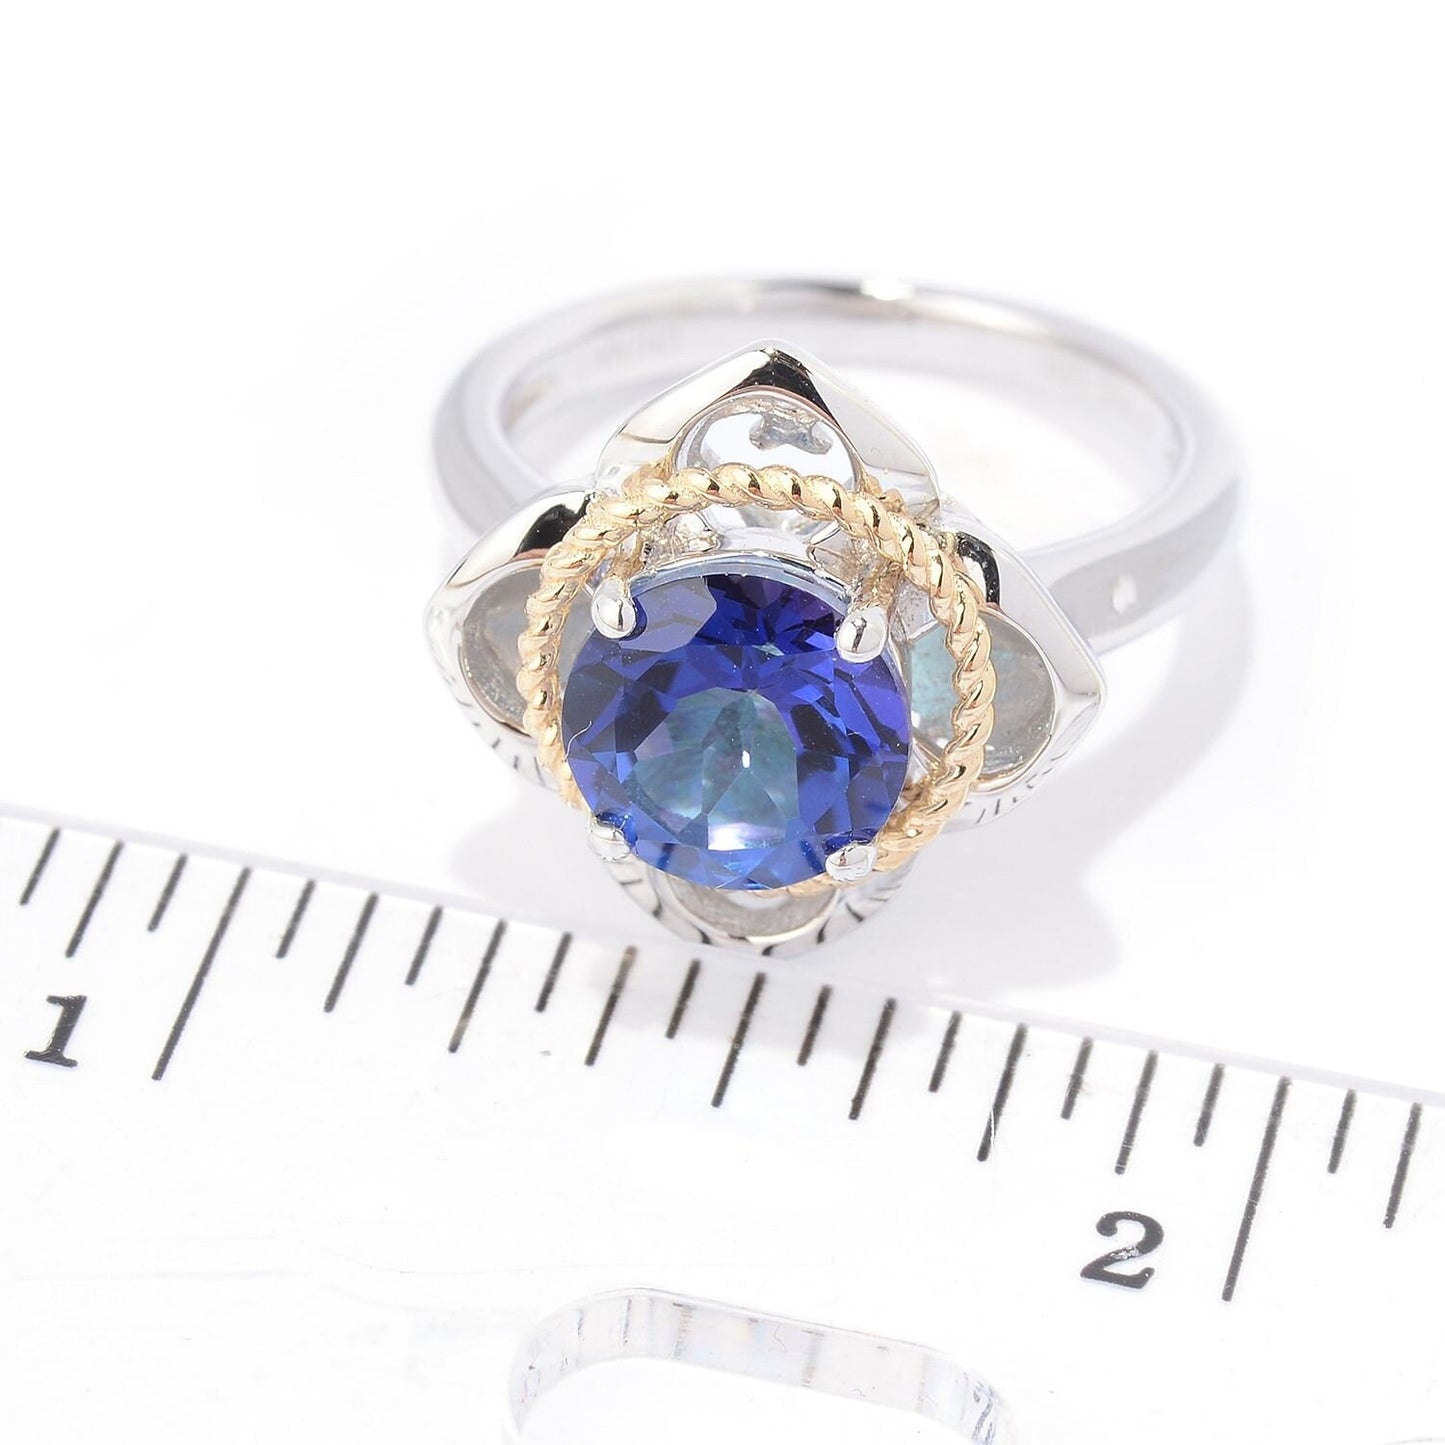 Tanzanite Topaz Gemstone Ring, 925 Sterling Silver Ring, Engagement Ring, Birthstone Ring-Gemstone Jewelry Anniversary Gift-Gift For Her